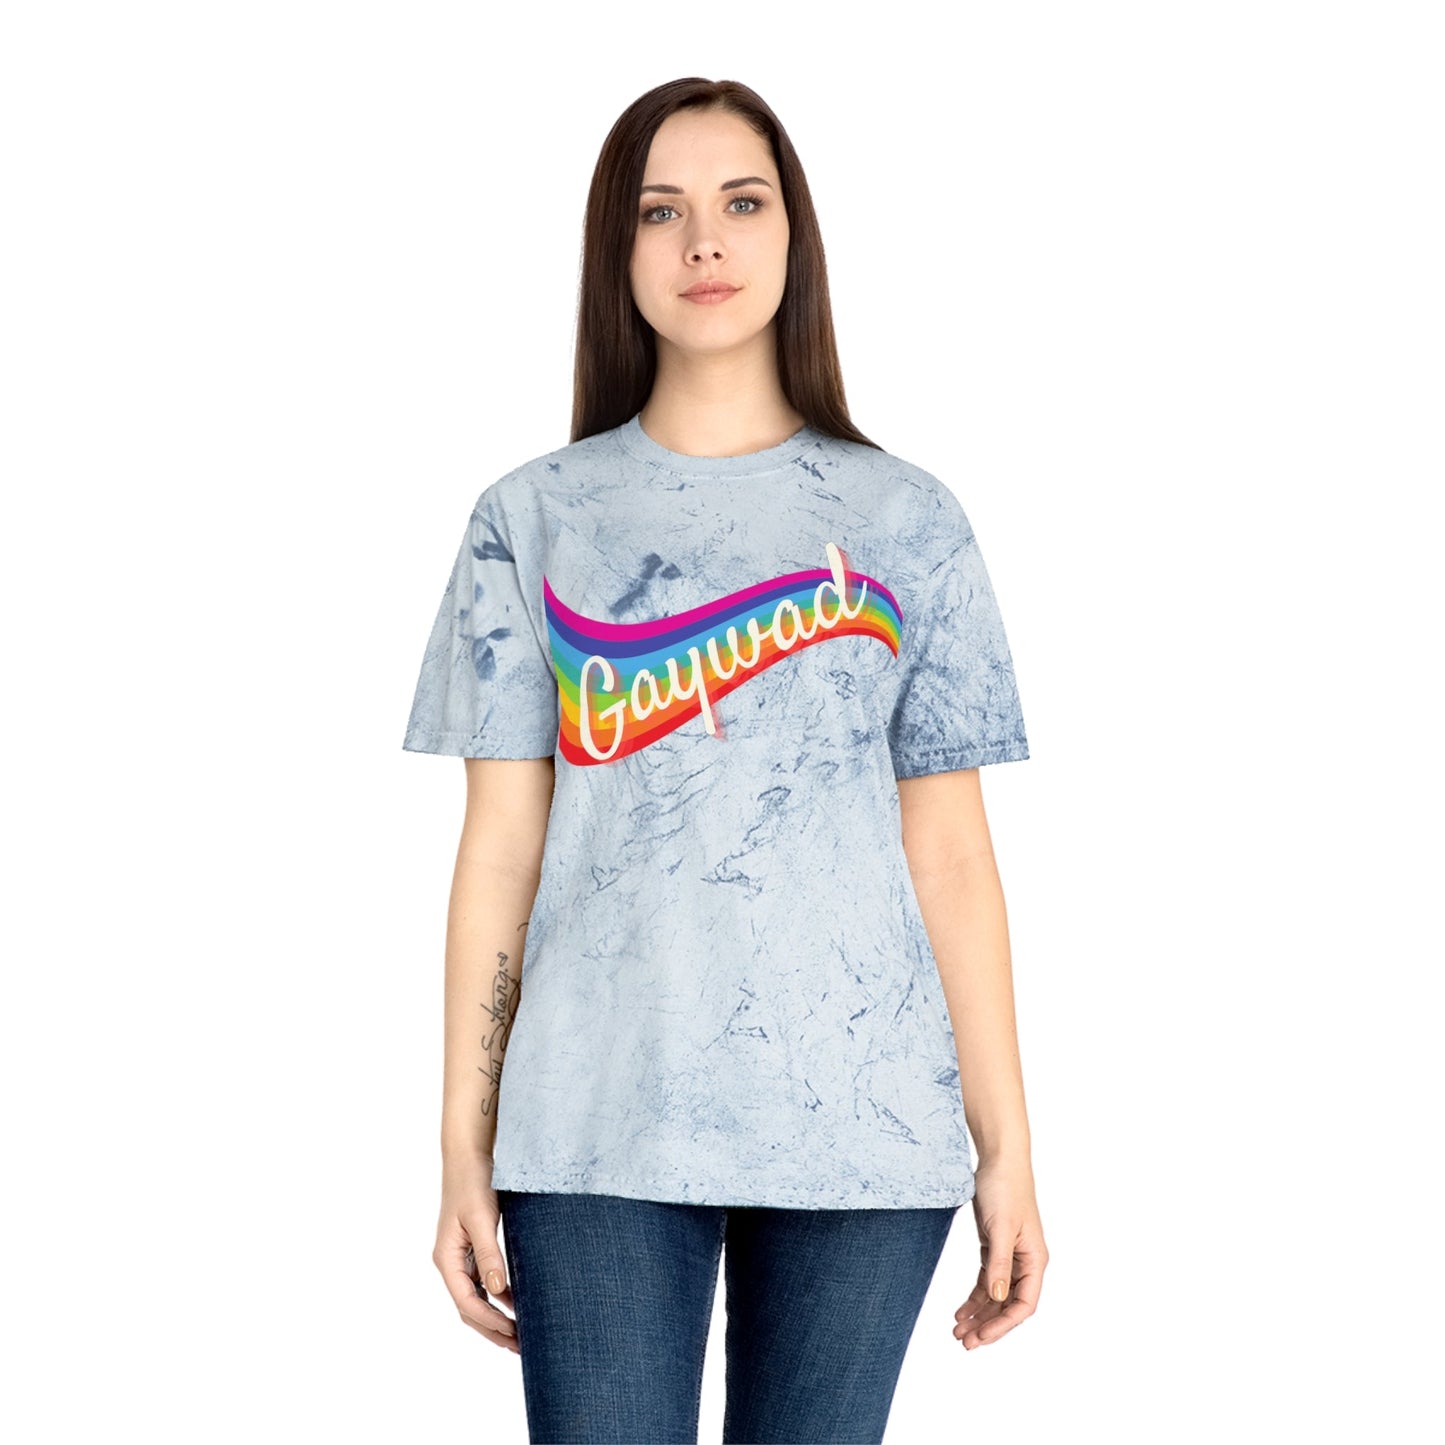 Gaywad Unisex Color Blast T-Shirt